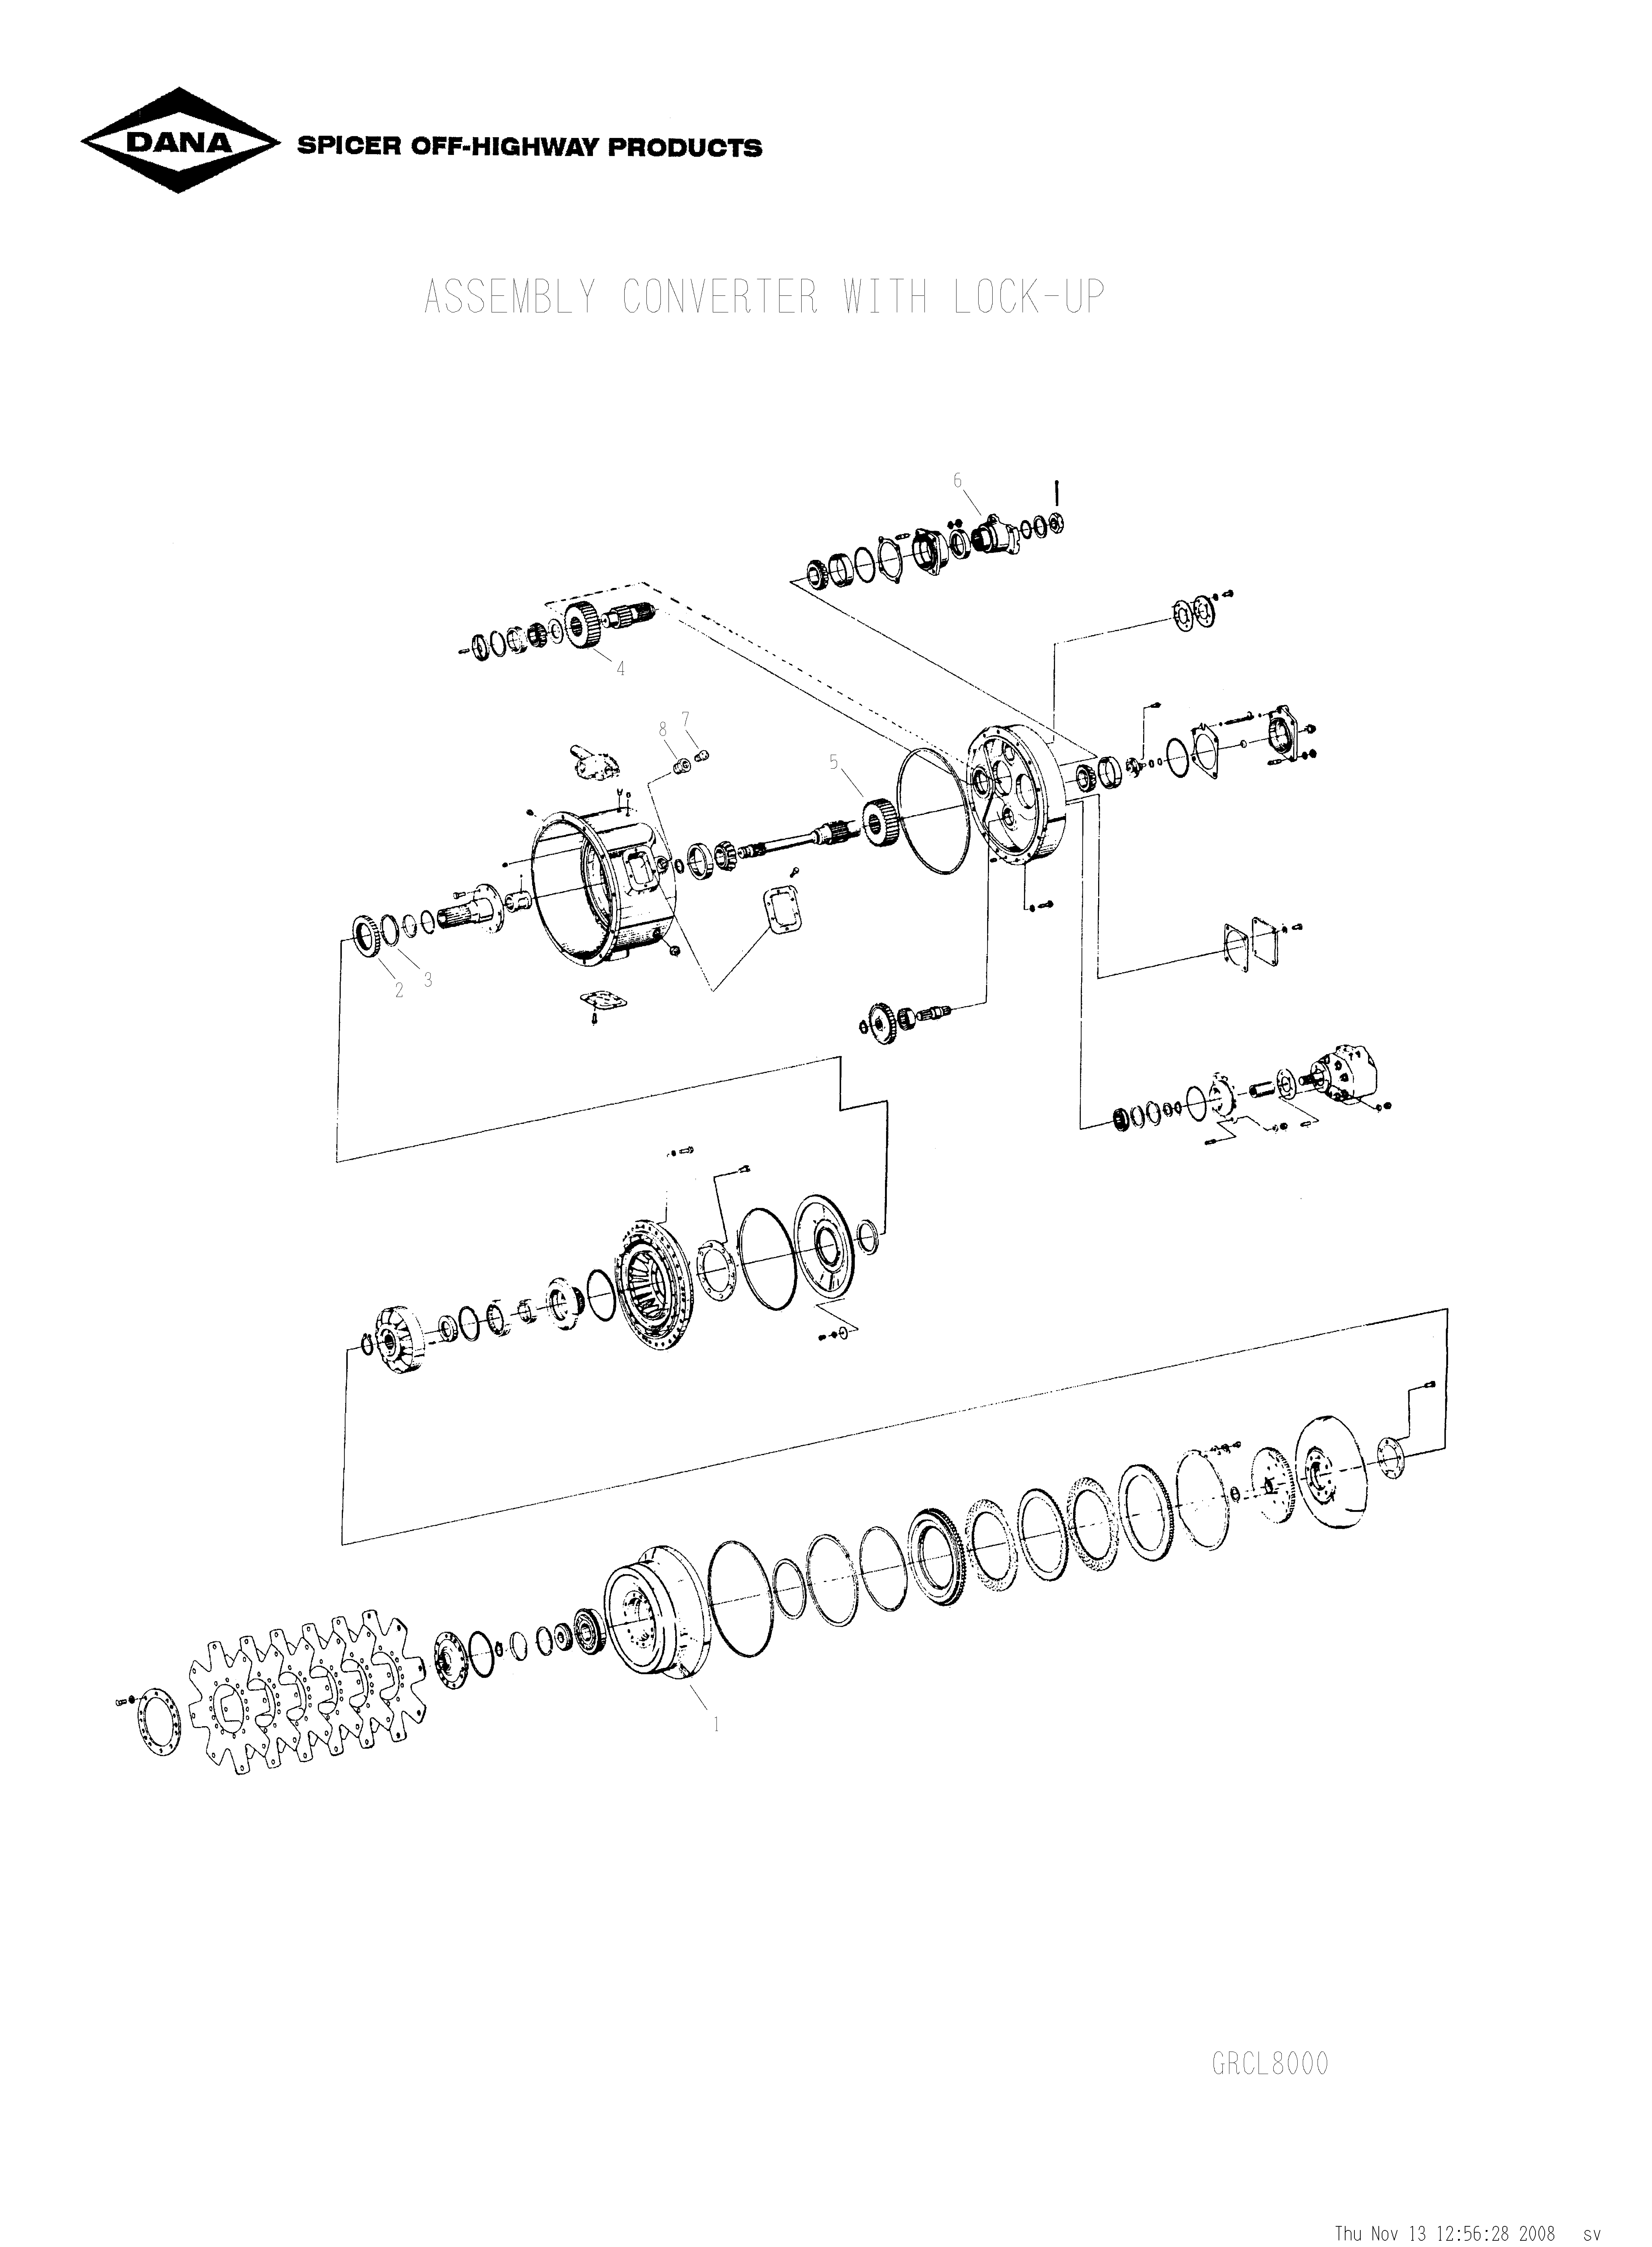 drawing for OLDENBURG LAKESHORE UV106412 - OIL GAUGE (figure 2)